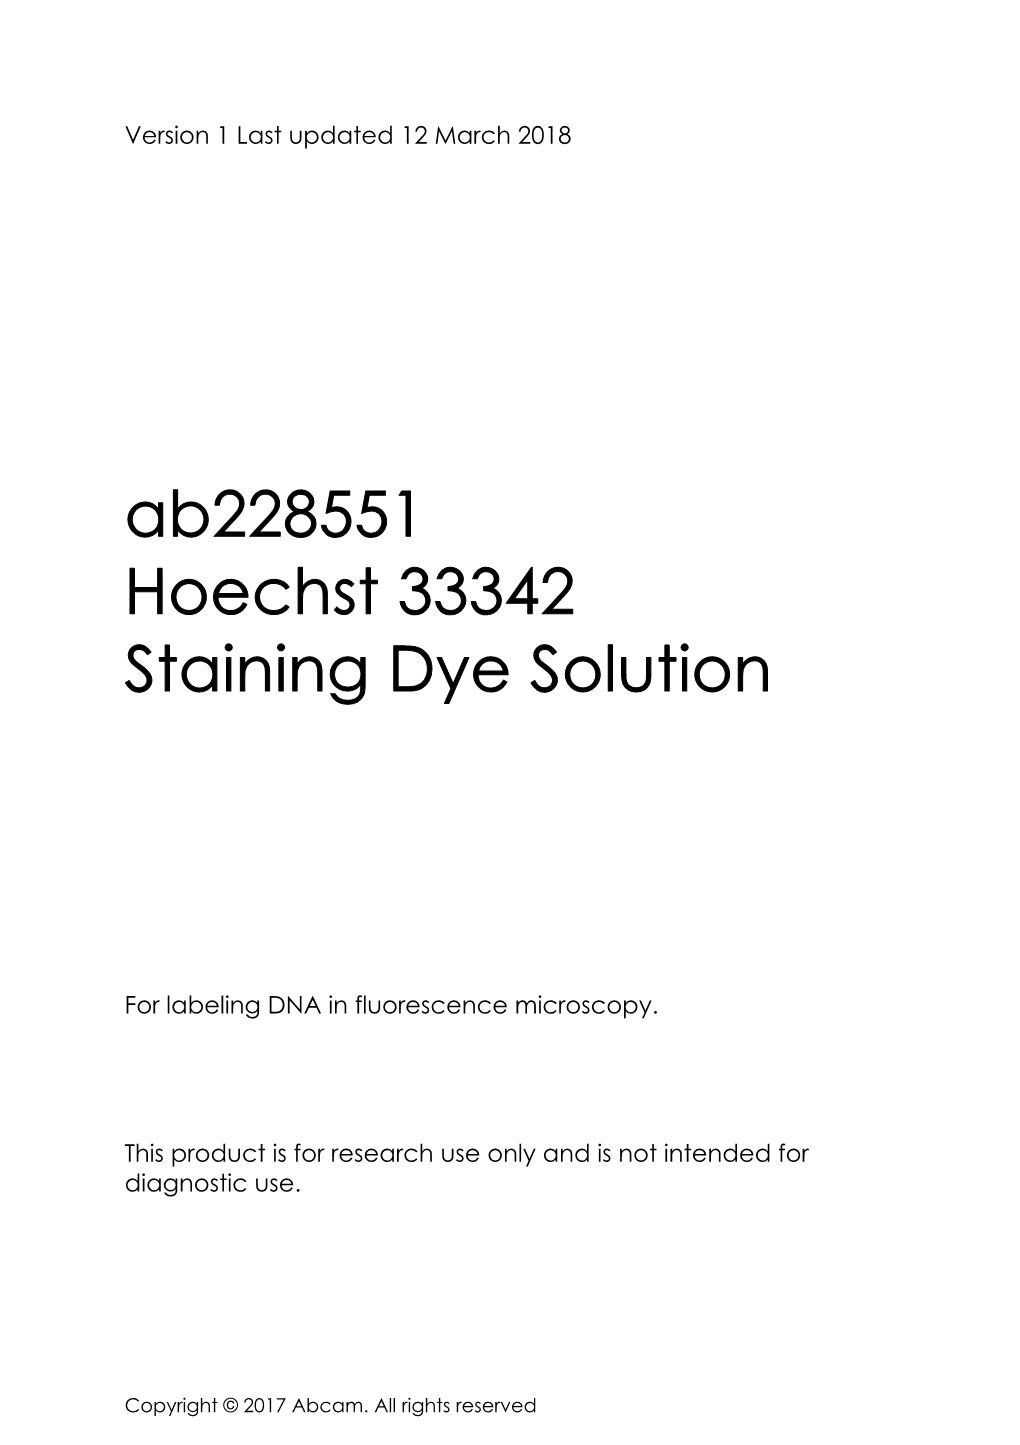 Ab228551 Hoechst 33342 Staining Dye Solution